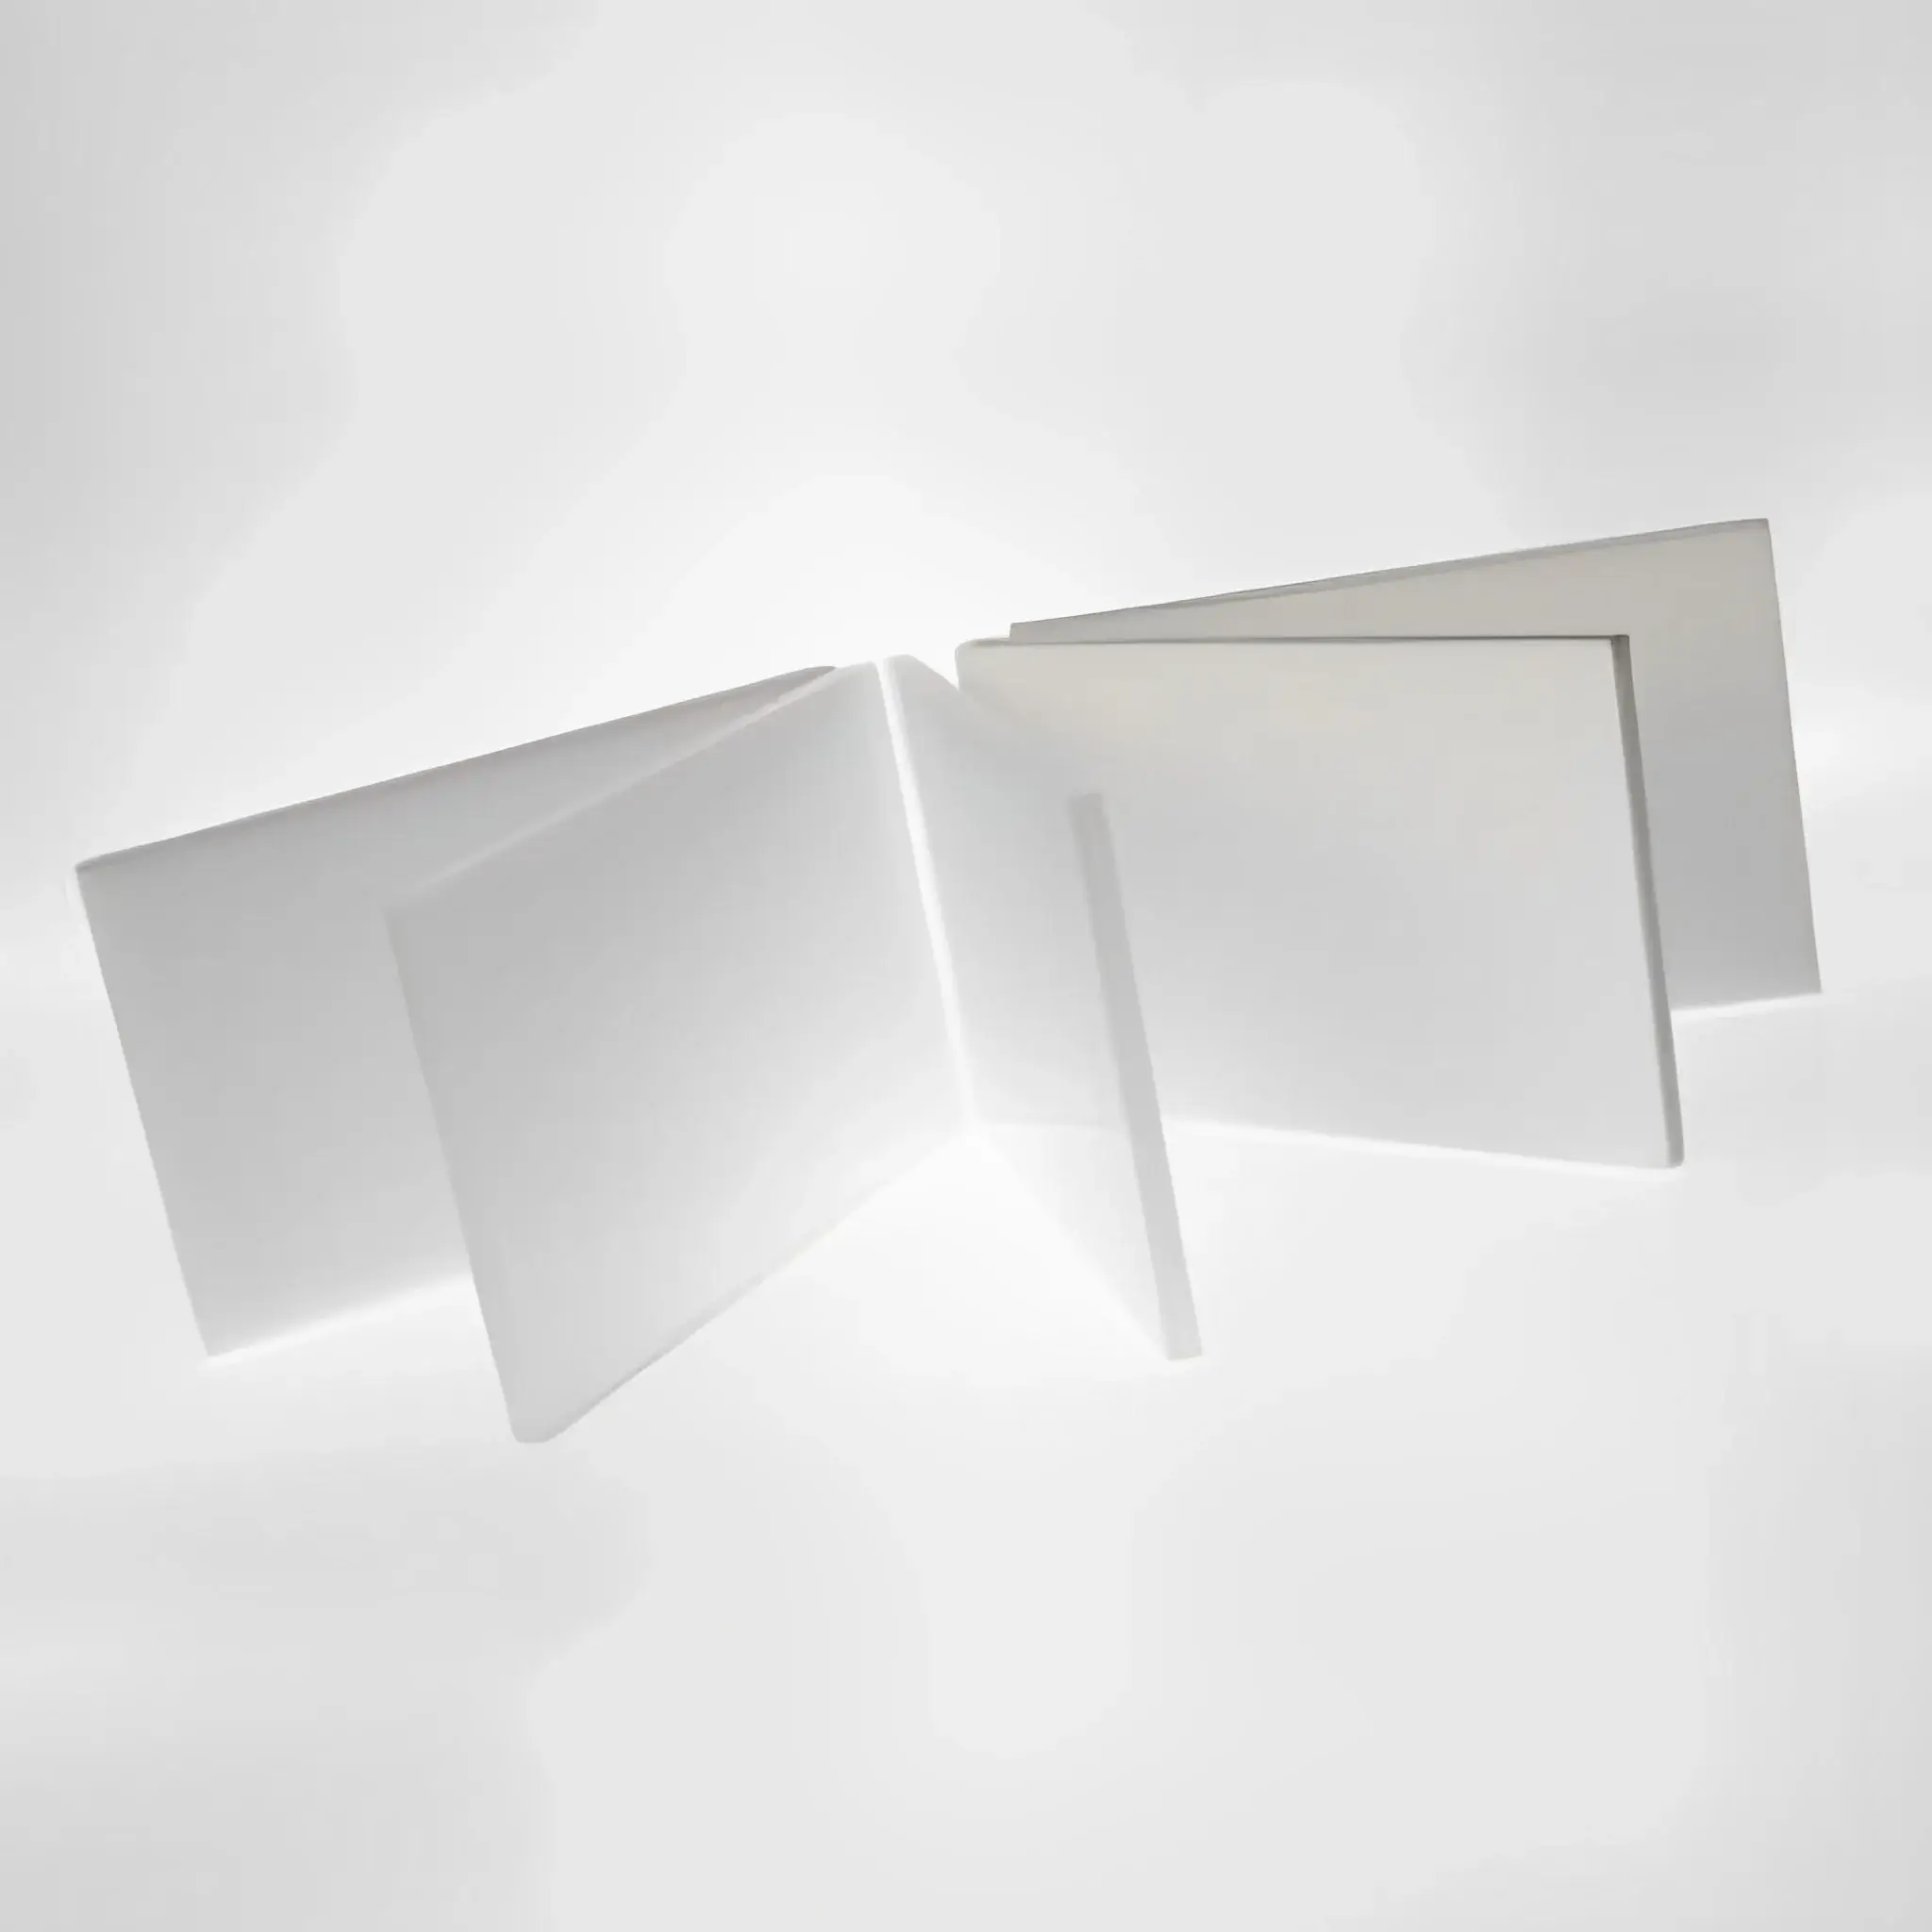 Acrylic Sheet - Maruti Flex Traders LLP